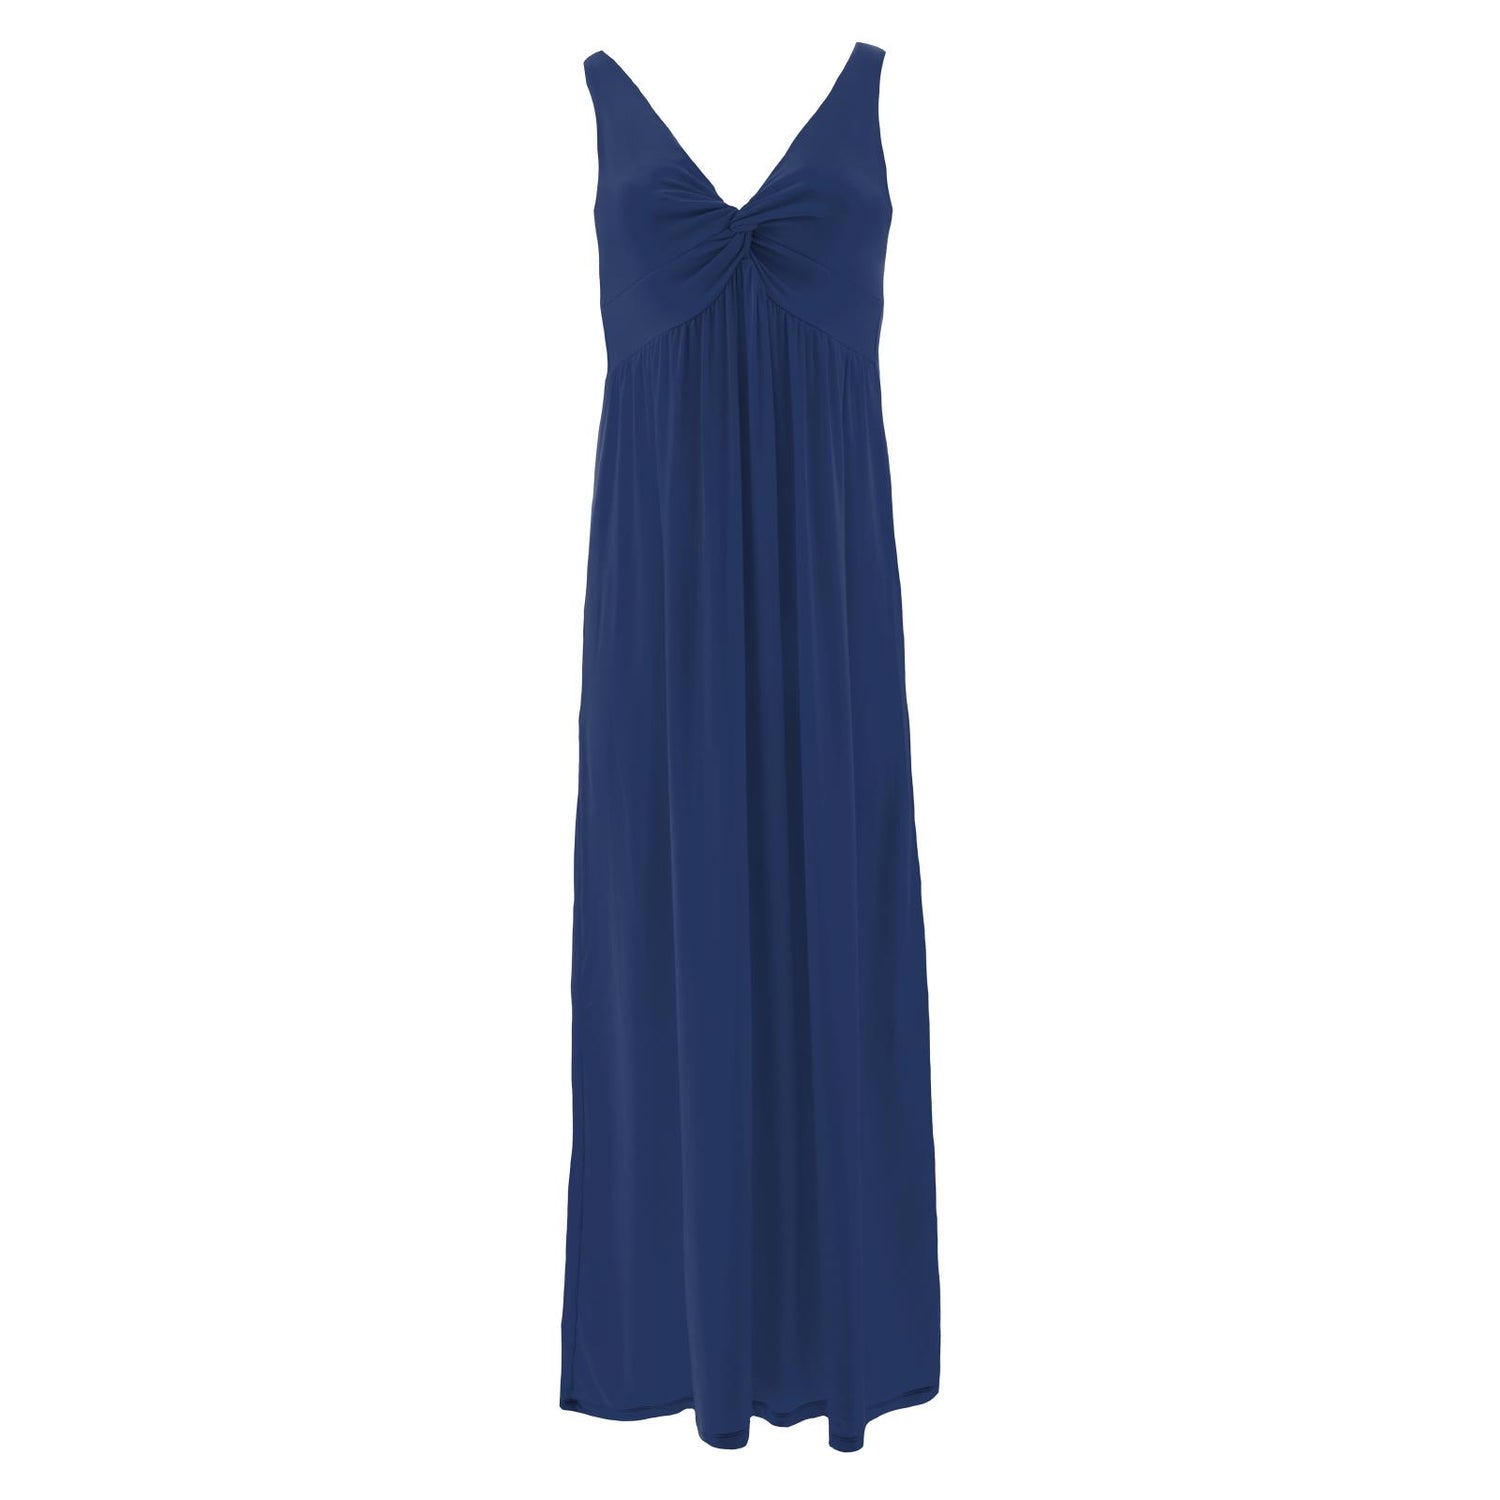 Women's Simple Twist Nightgown in Flag Blue